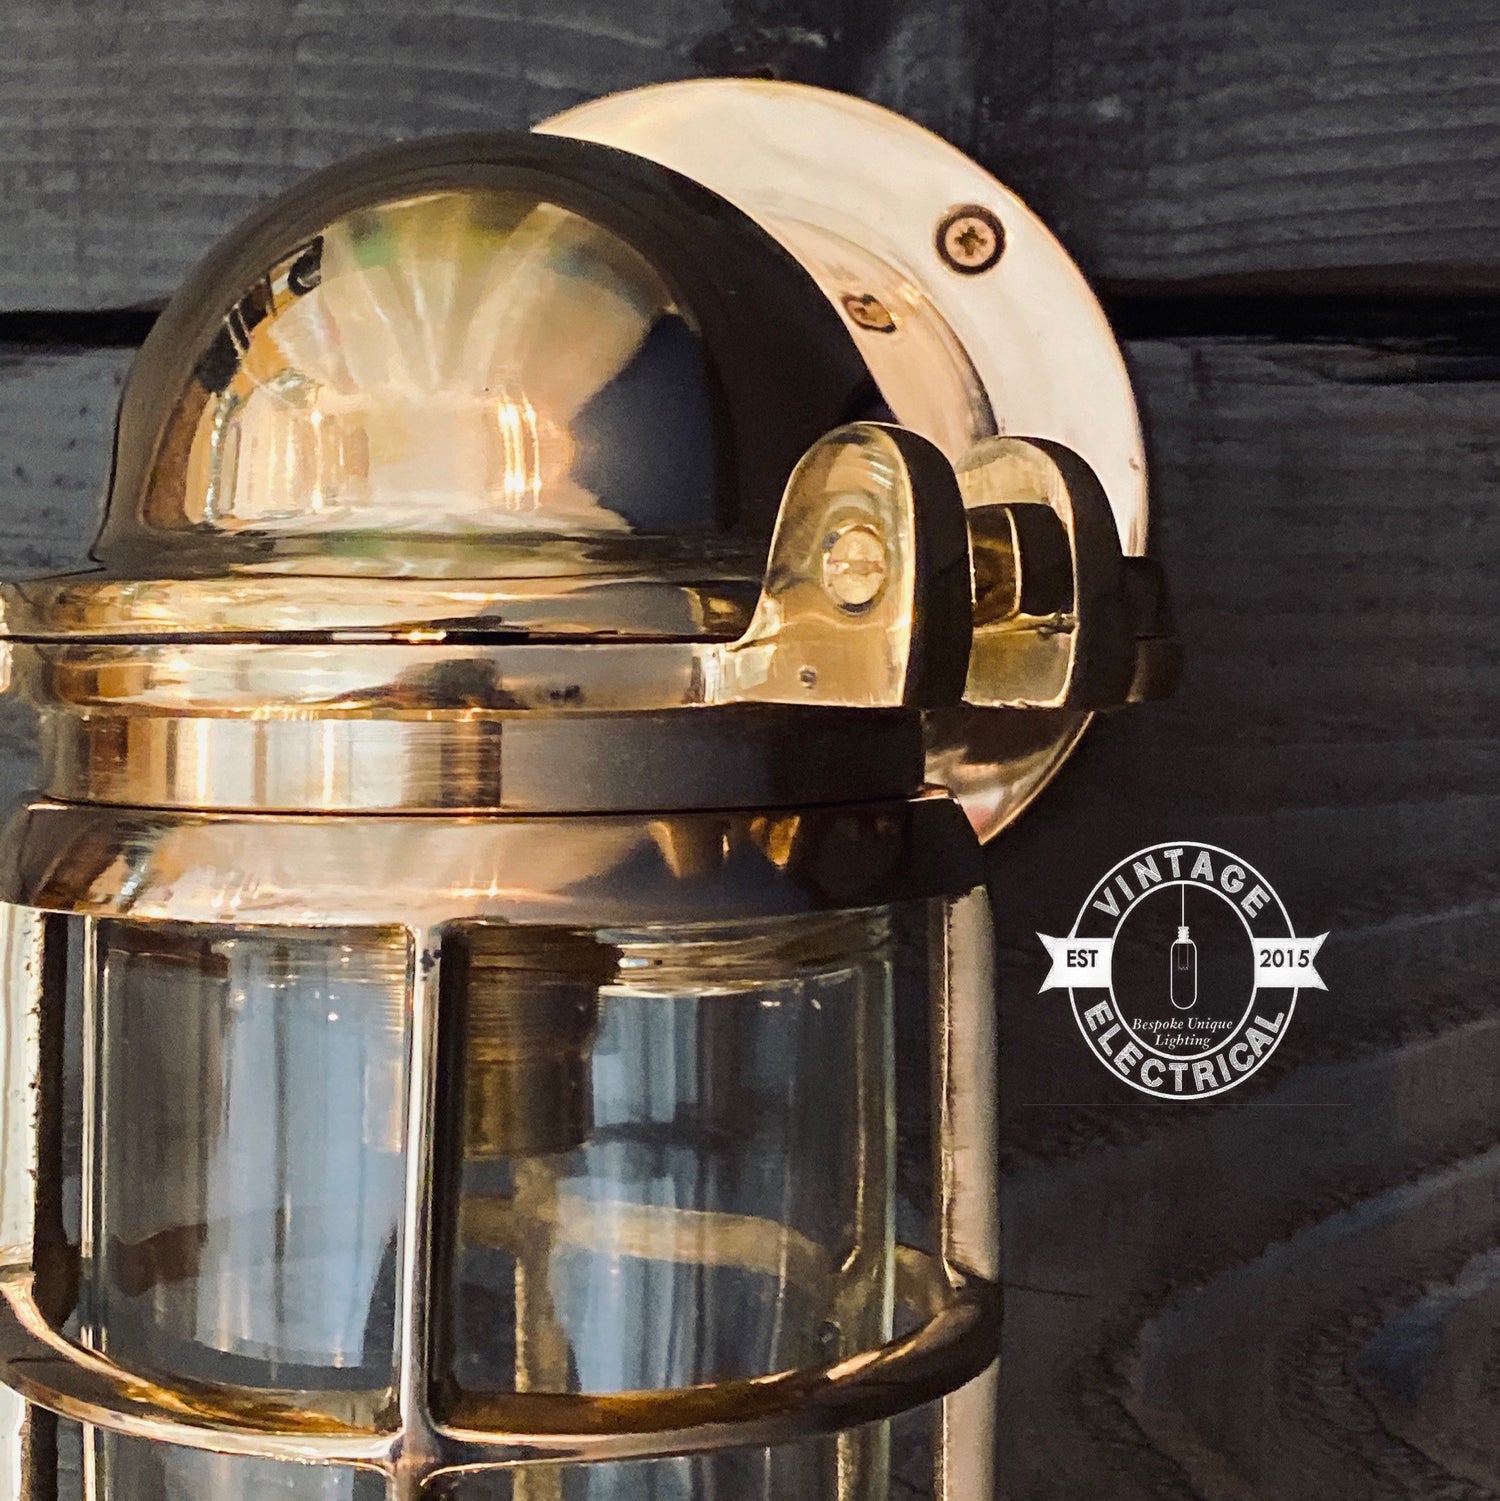 Antique Brass Nautical Exterior Bulkhead Light- Lighting and Lights UK